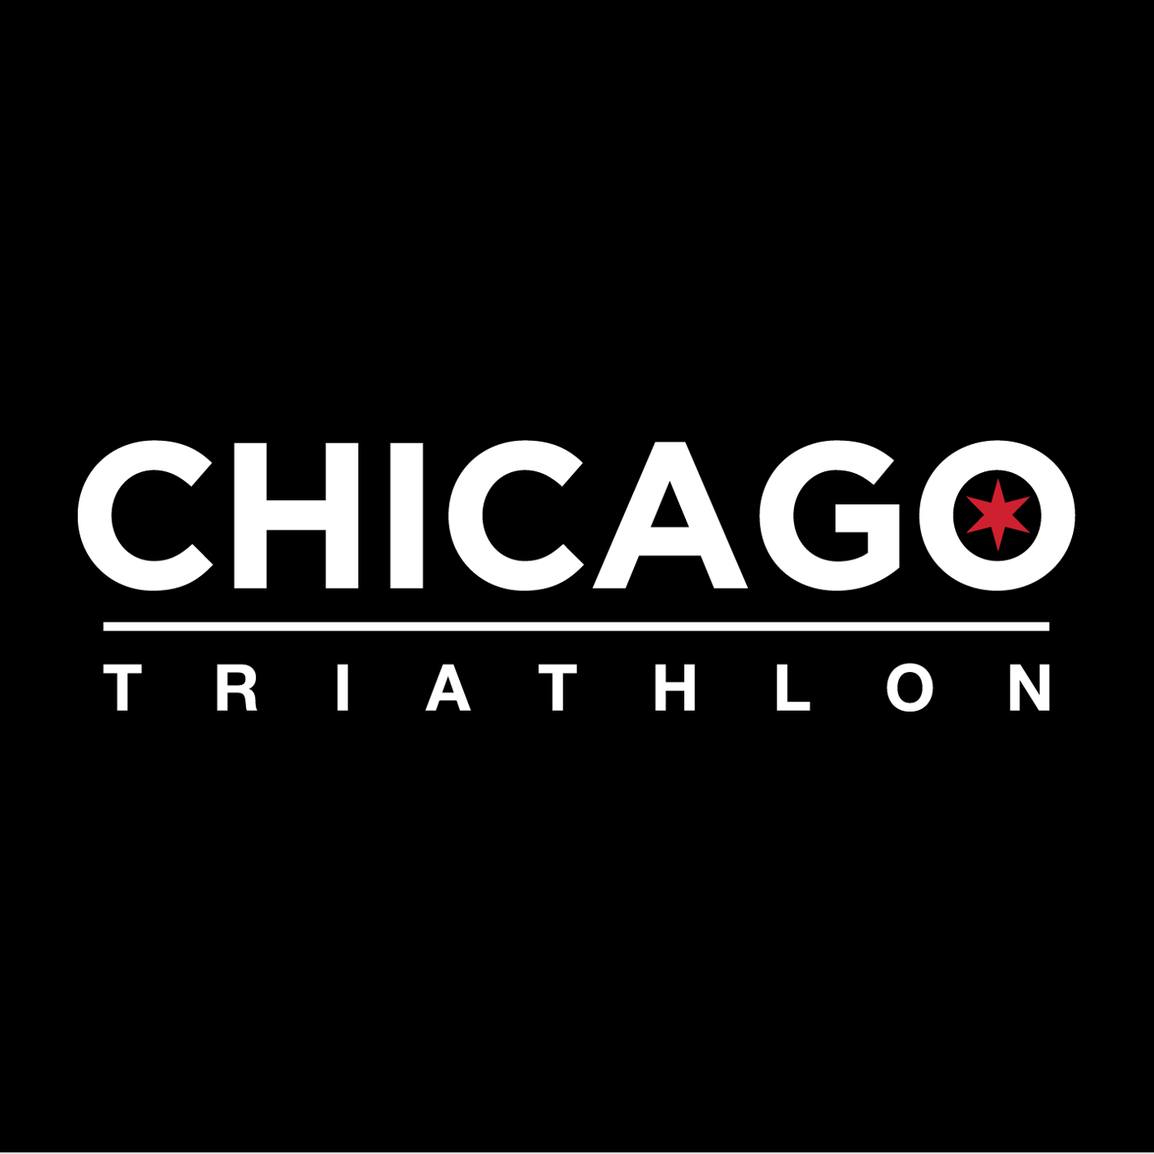 Chicago Triathlon logo on RaceRaves